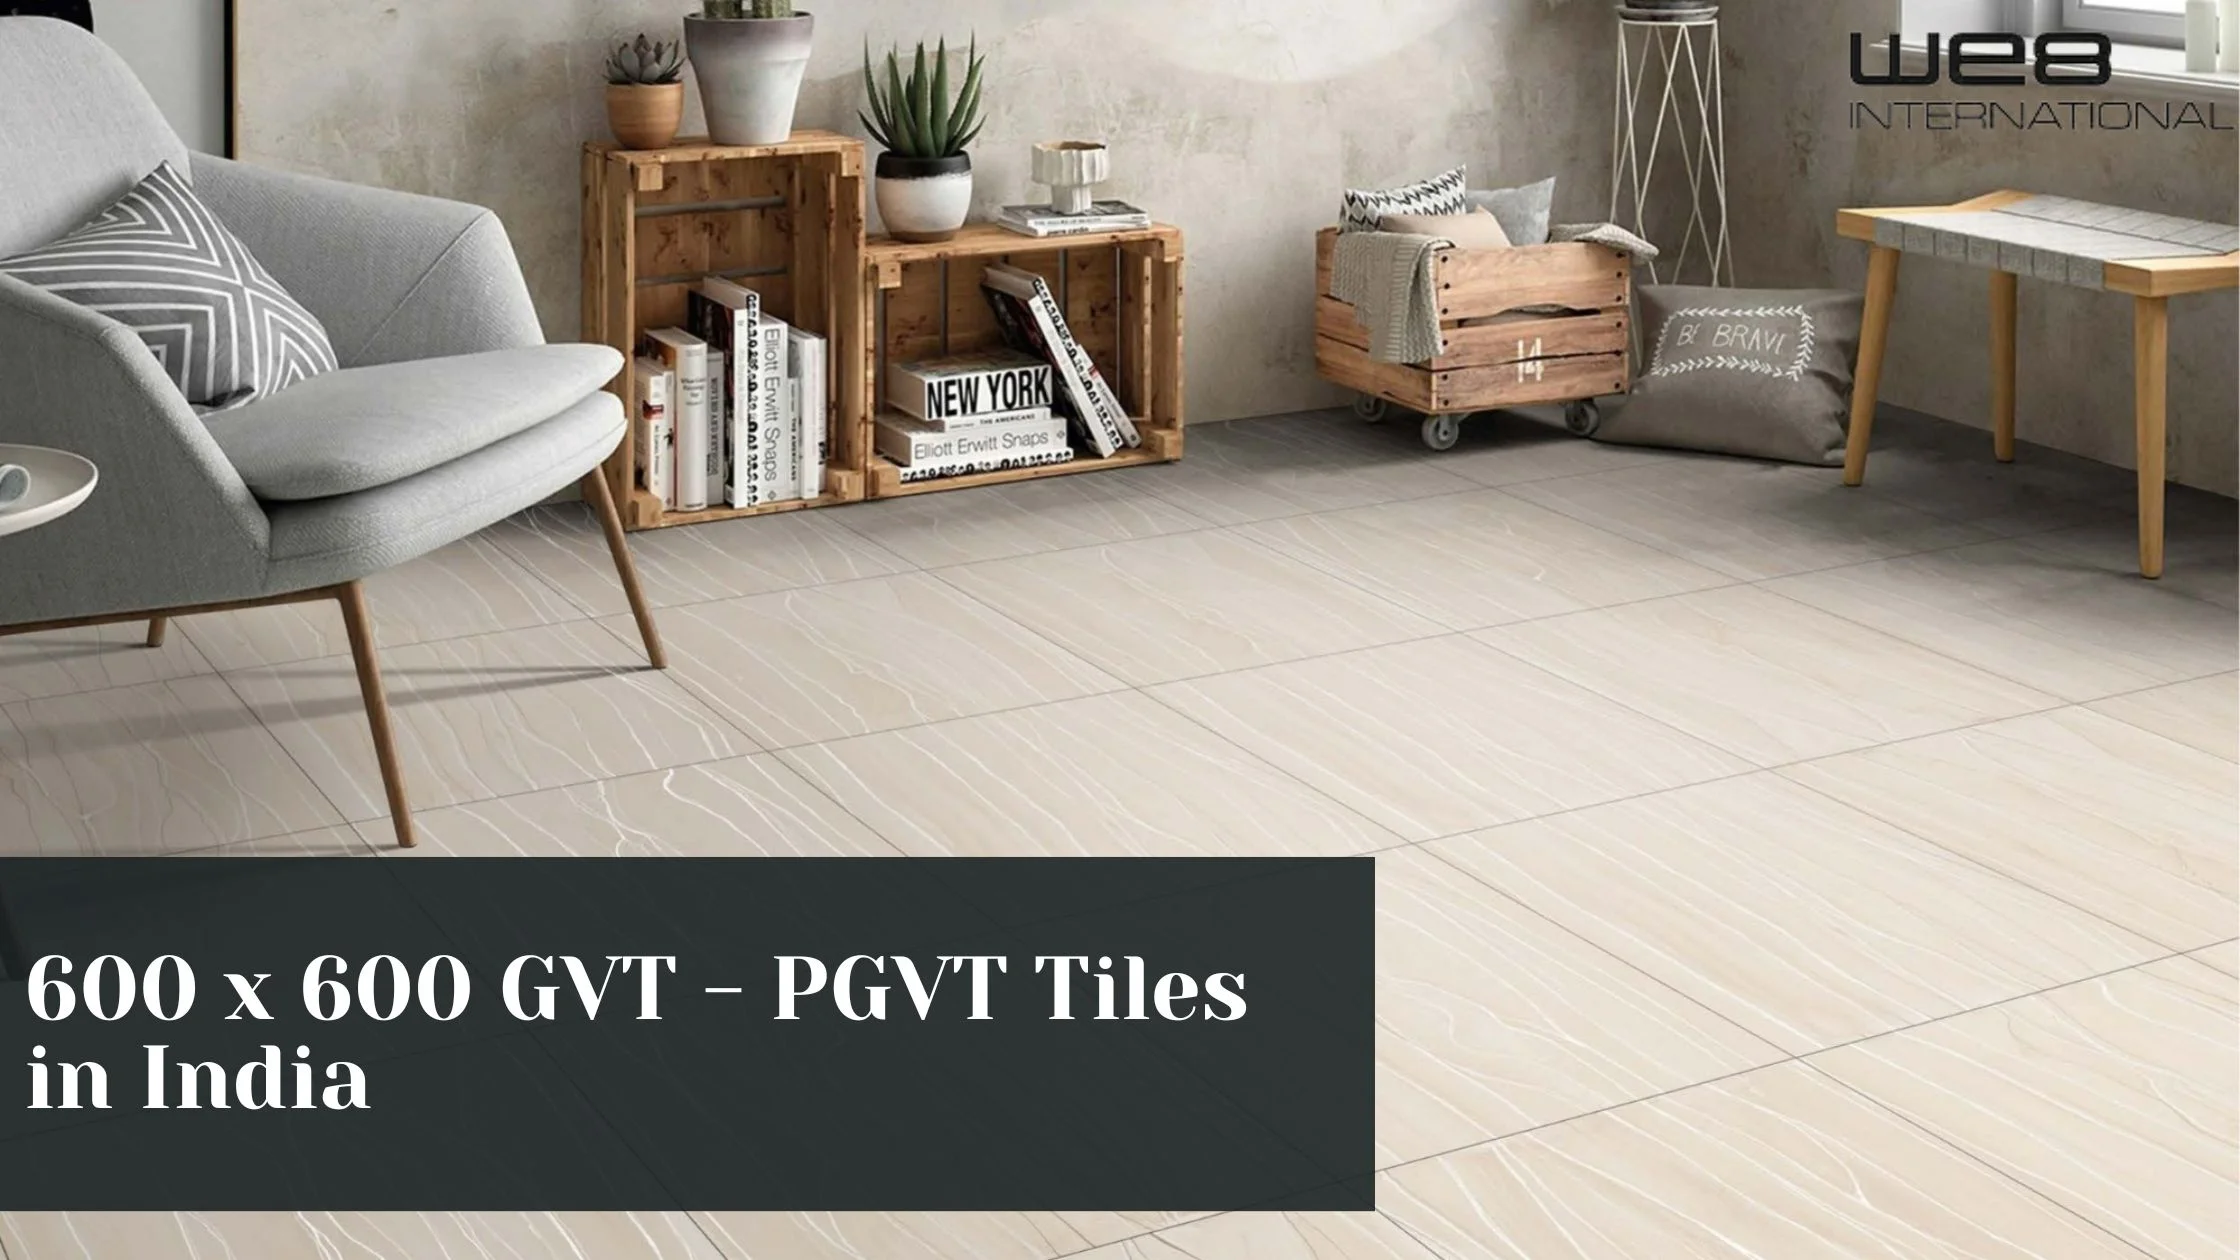 600 x 600 GVT - PGVT Tiles in India